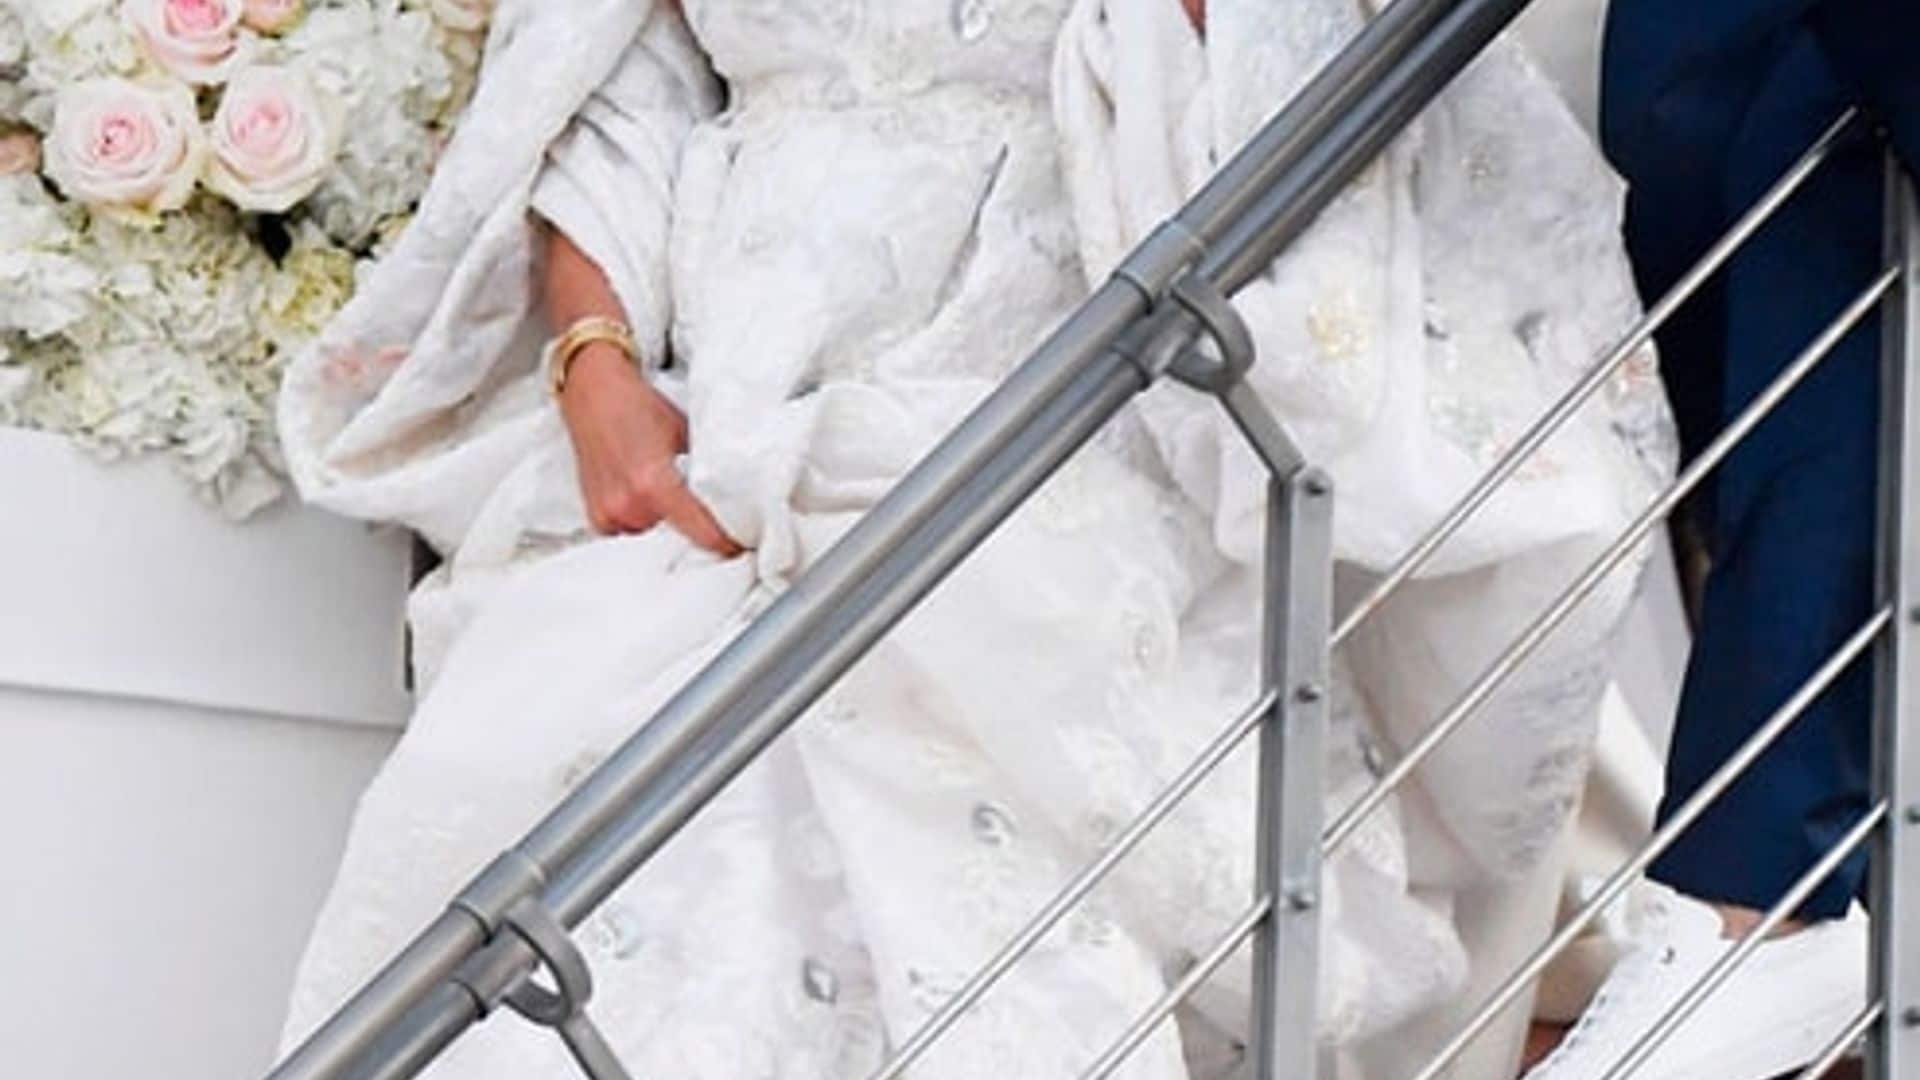 Heidi Klum wears fairytale bridal gown to wed Tom Kaulitz on luxury yacht